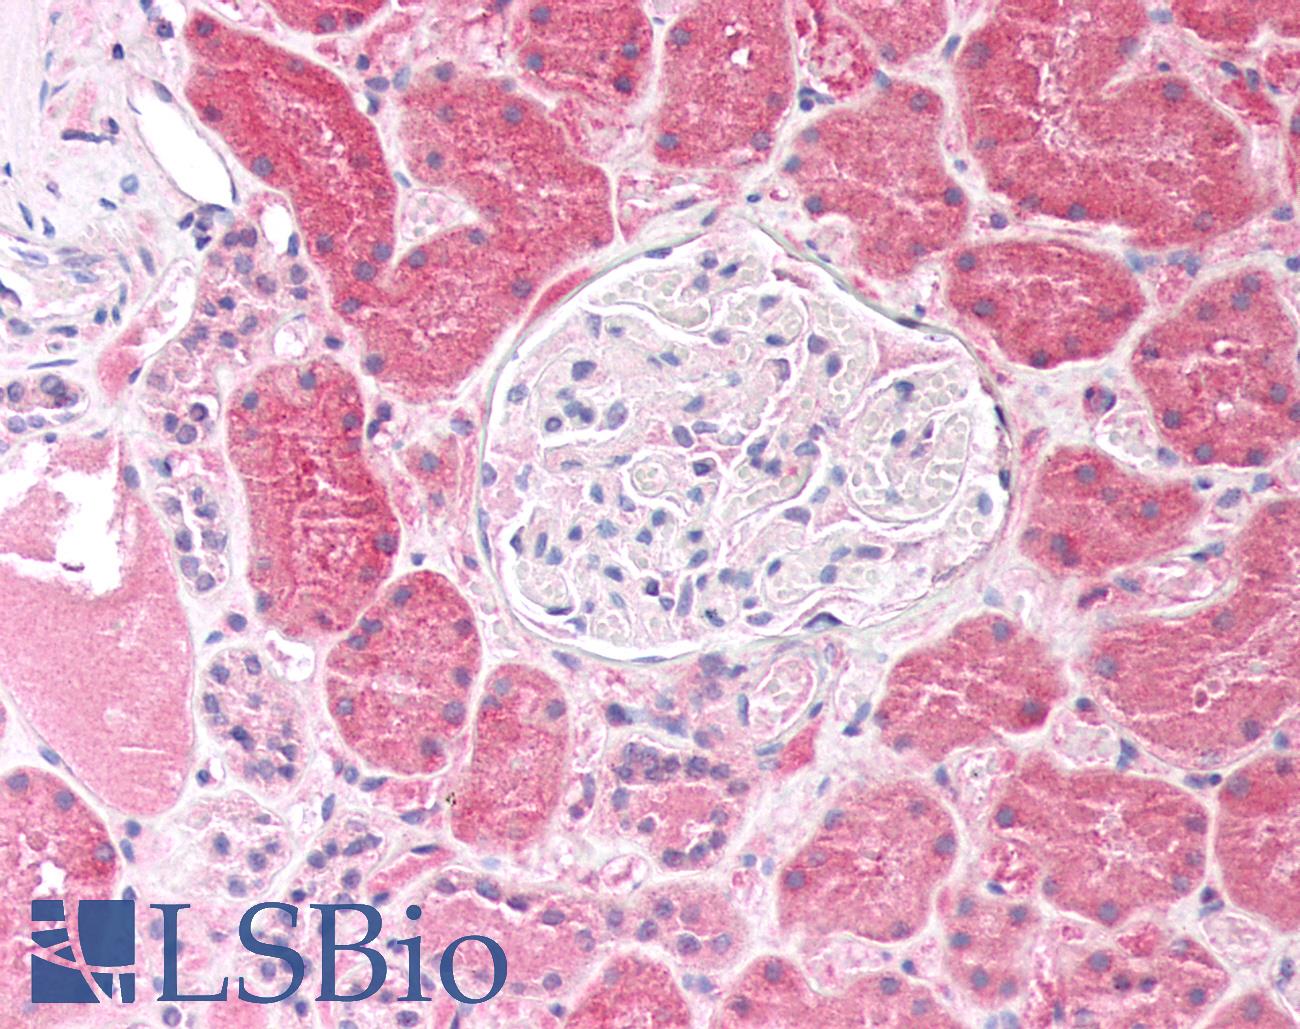 LAP3 Antibody - Human Kidney: Formalin-Fixed, Paraffin-Embedded (FFPE)